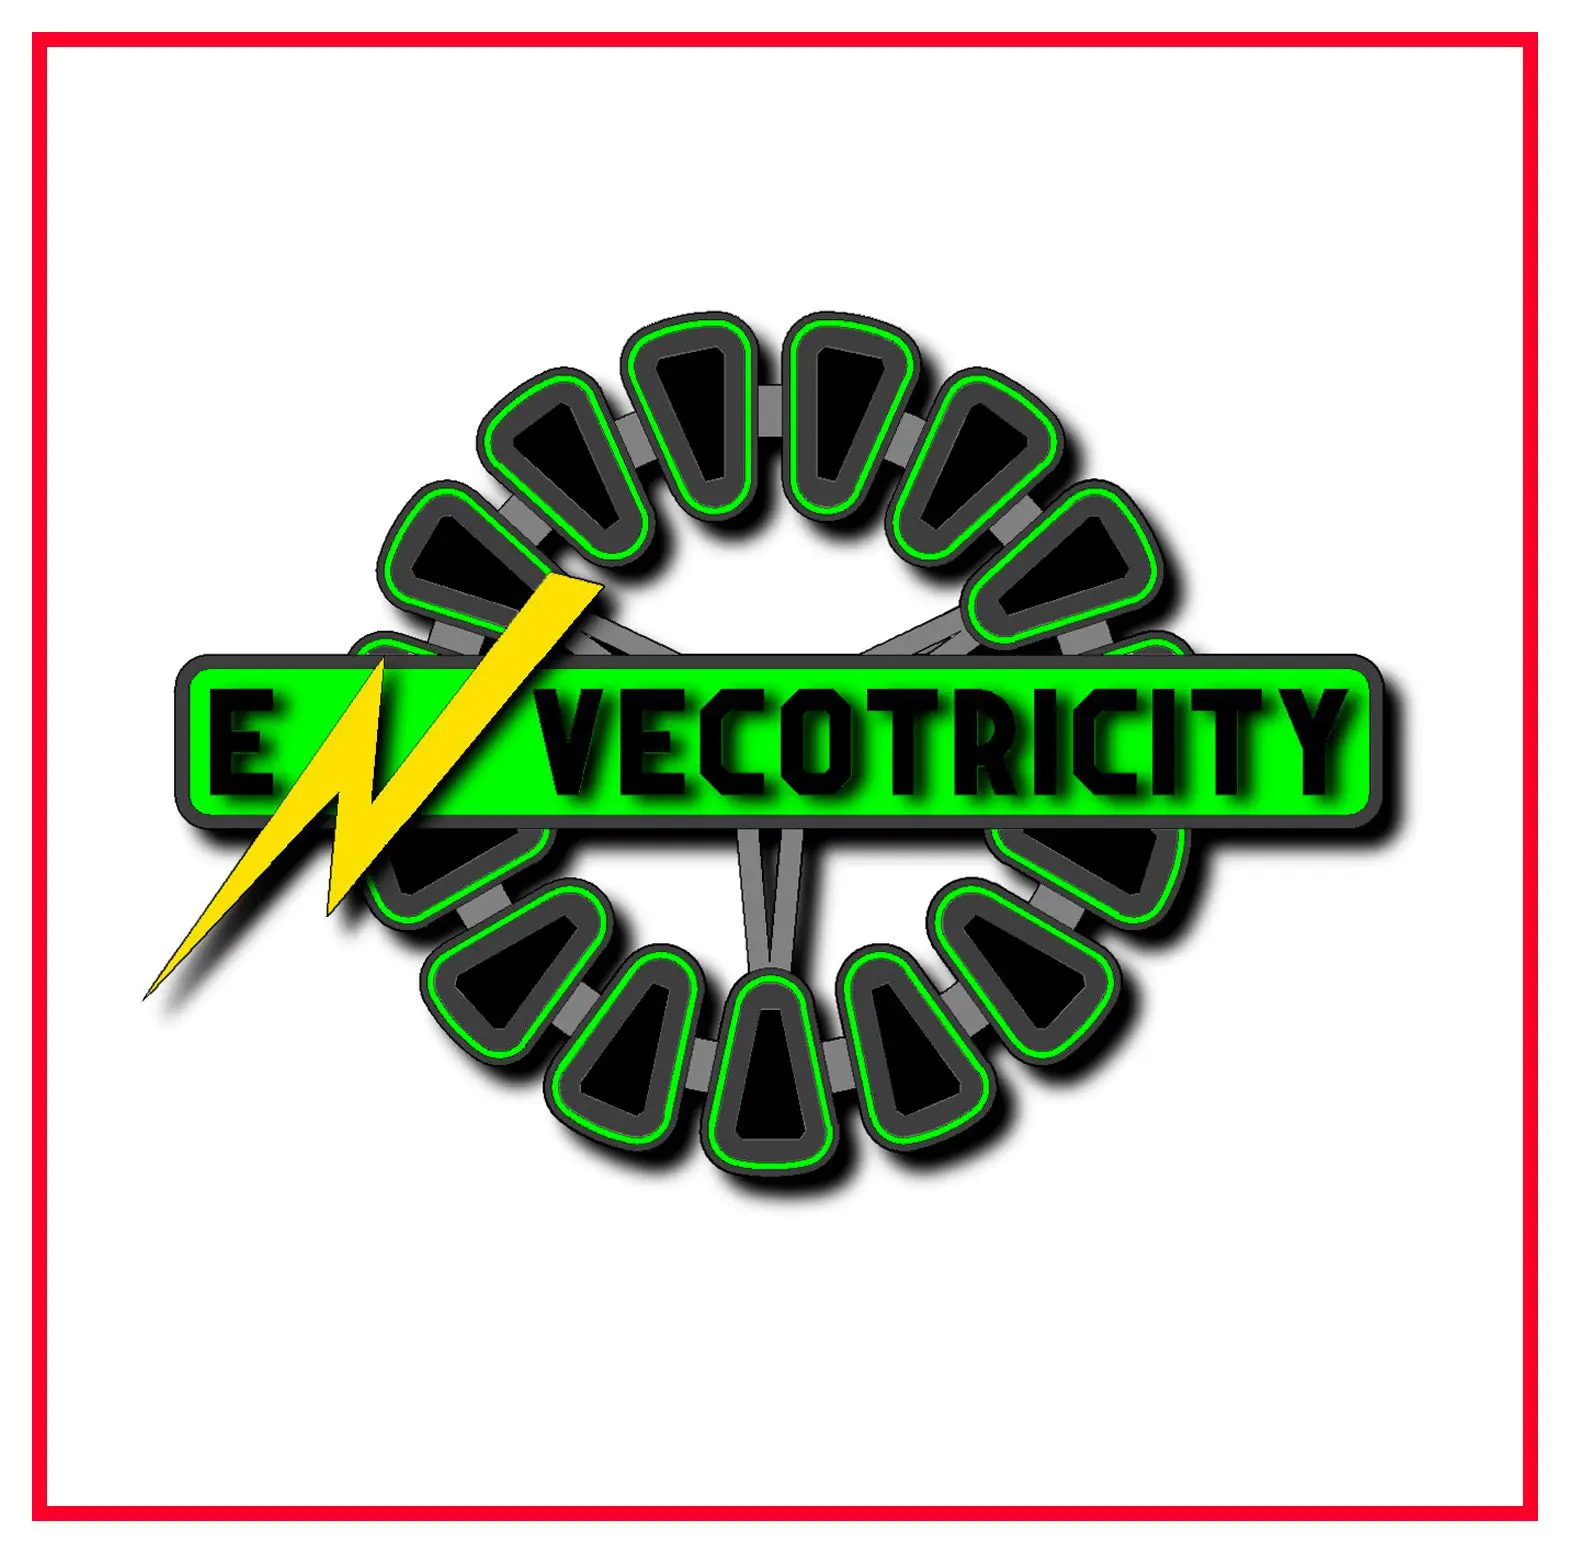 Logo Envecotricity